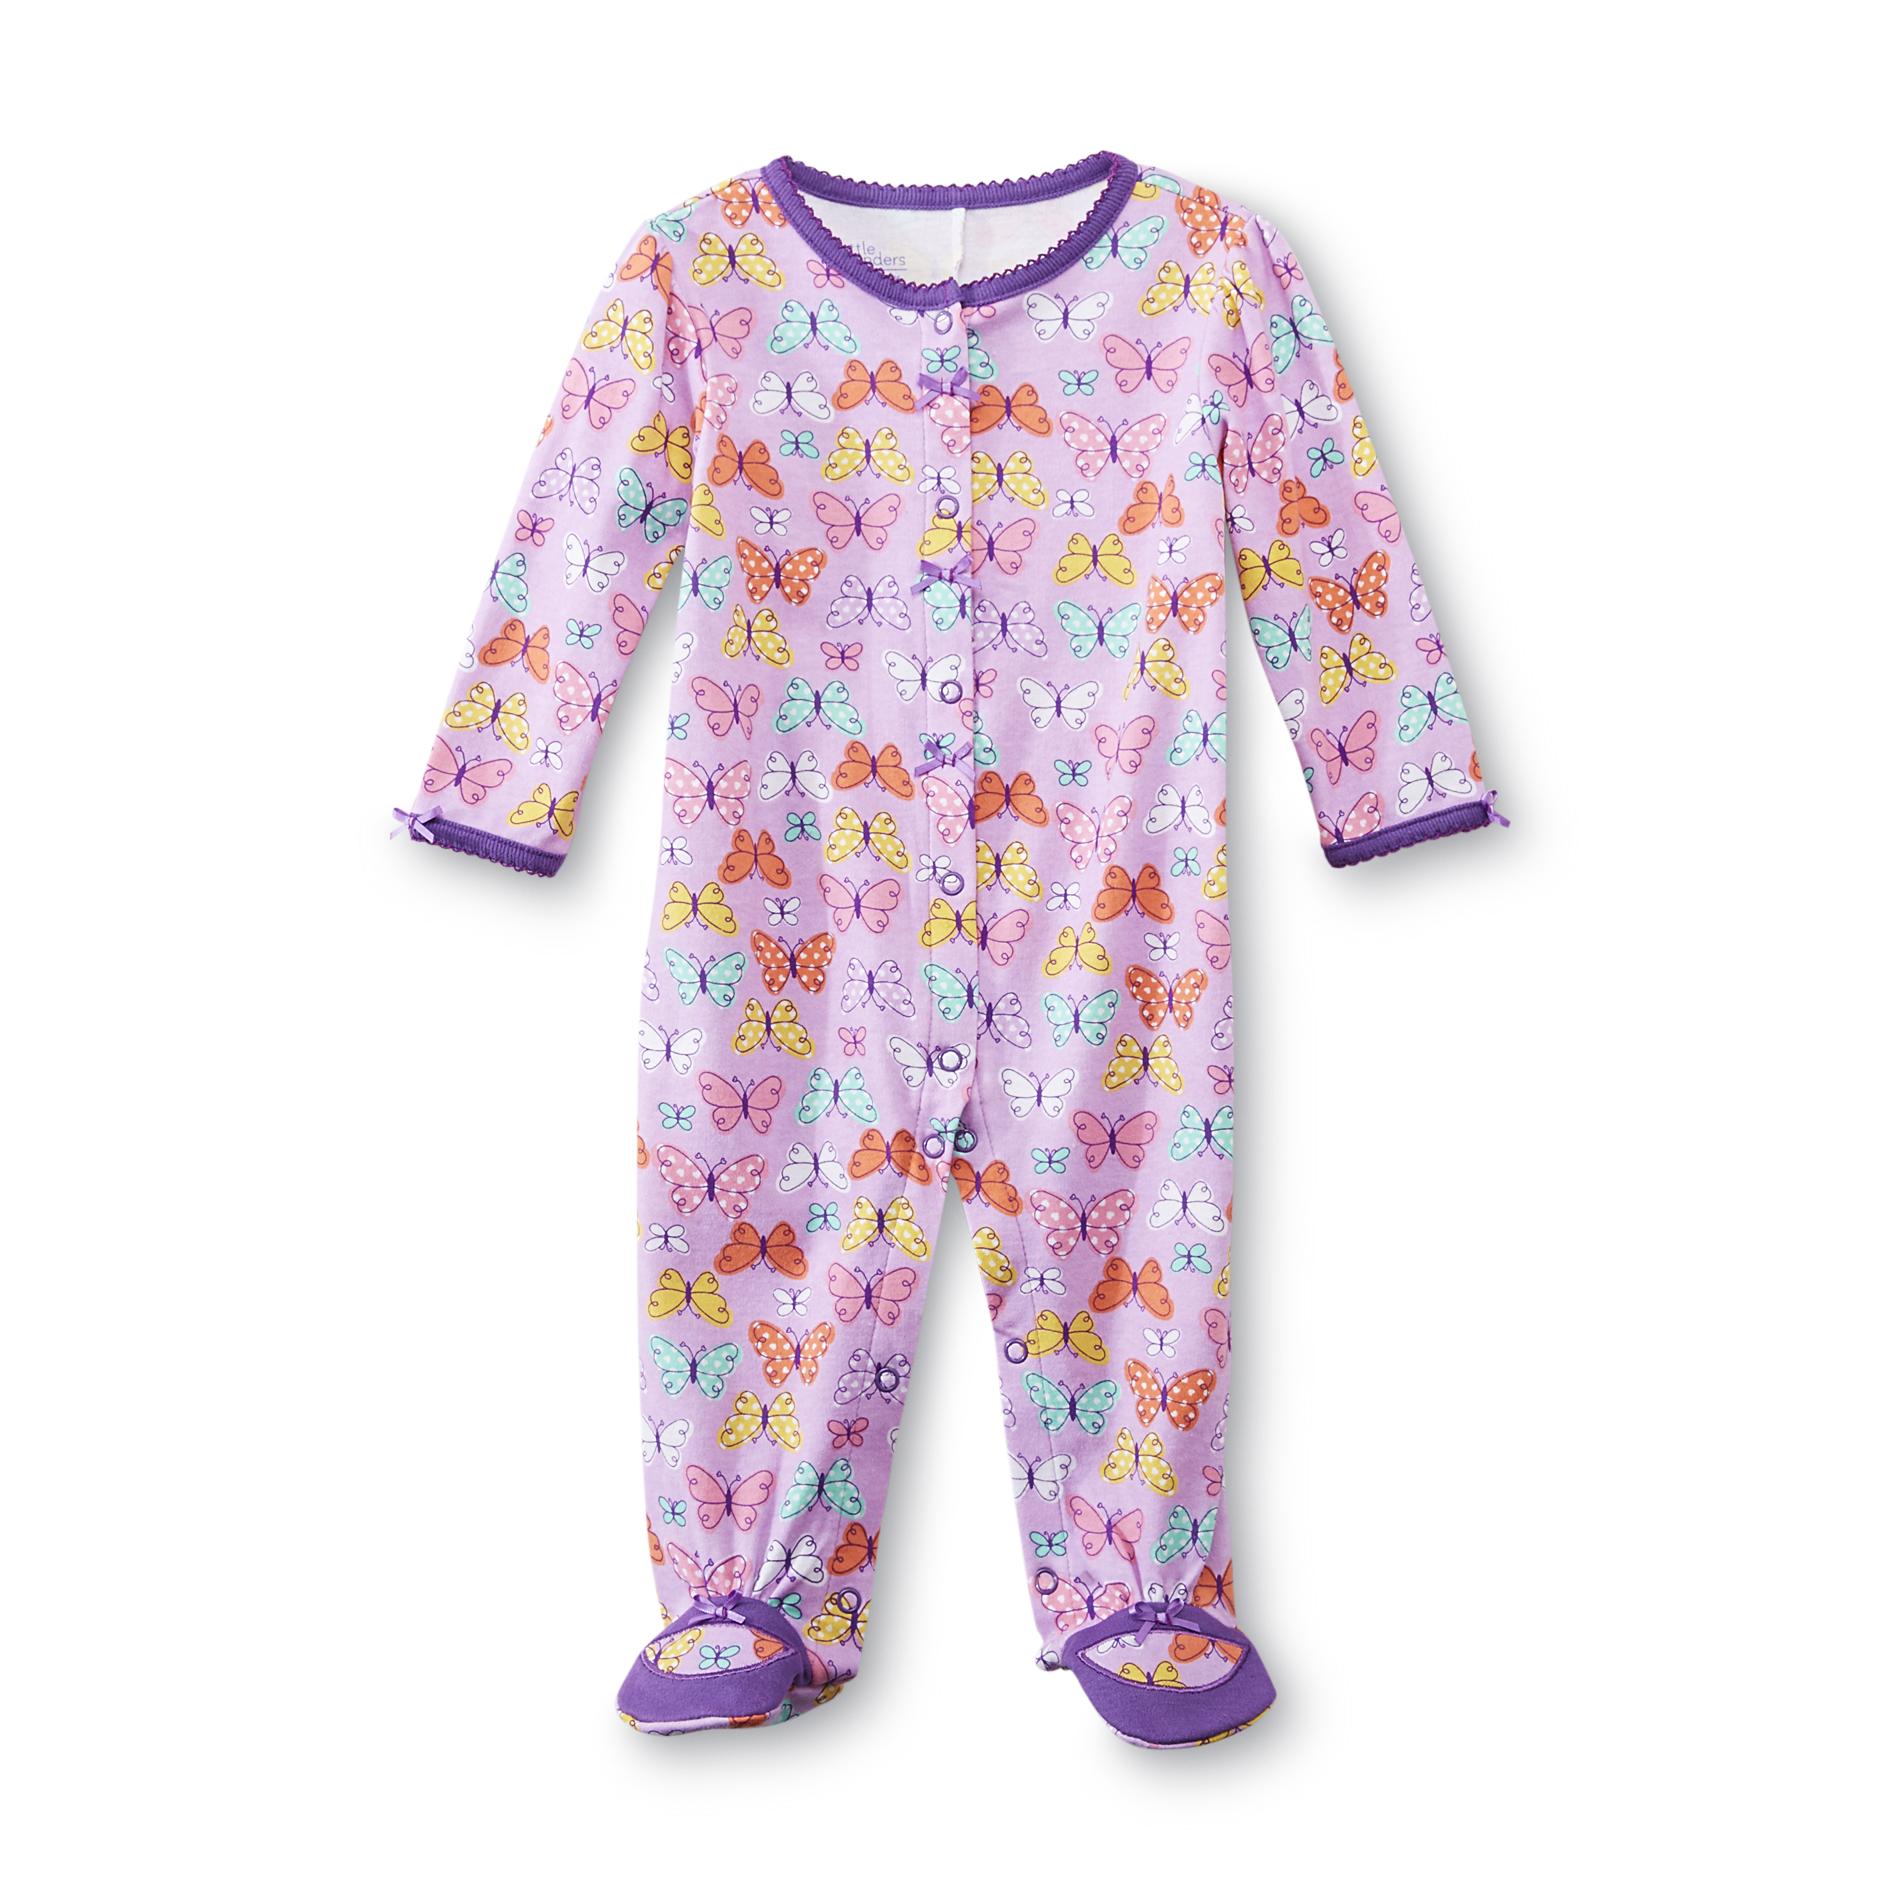 Little Wonders Newborn Girl's Footed Sleeper Pajamas - Butterflies